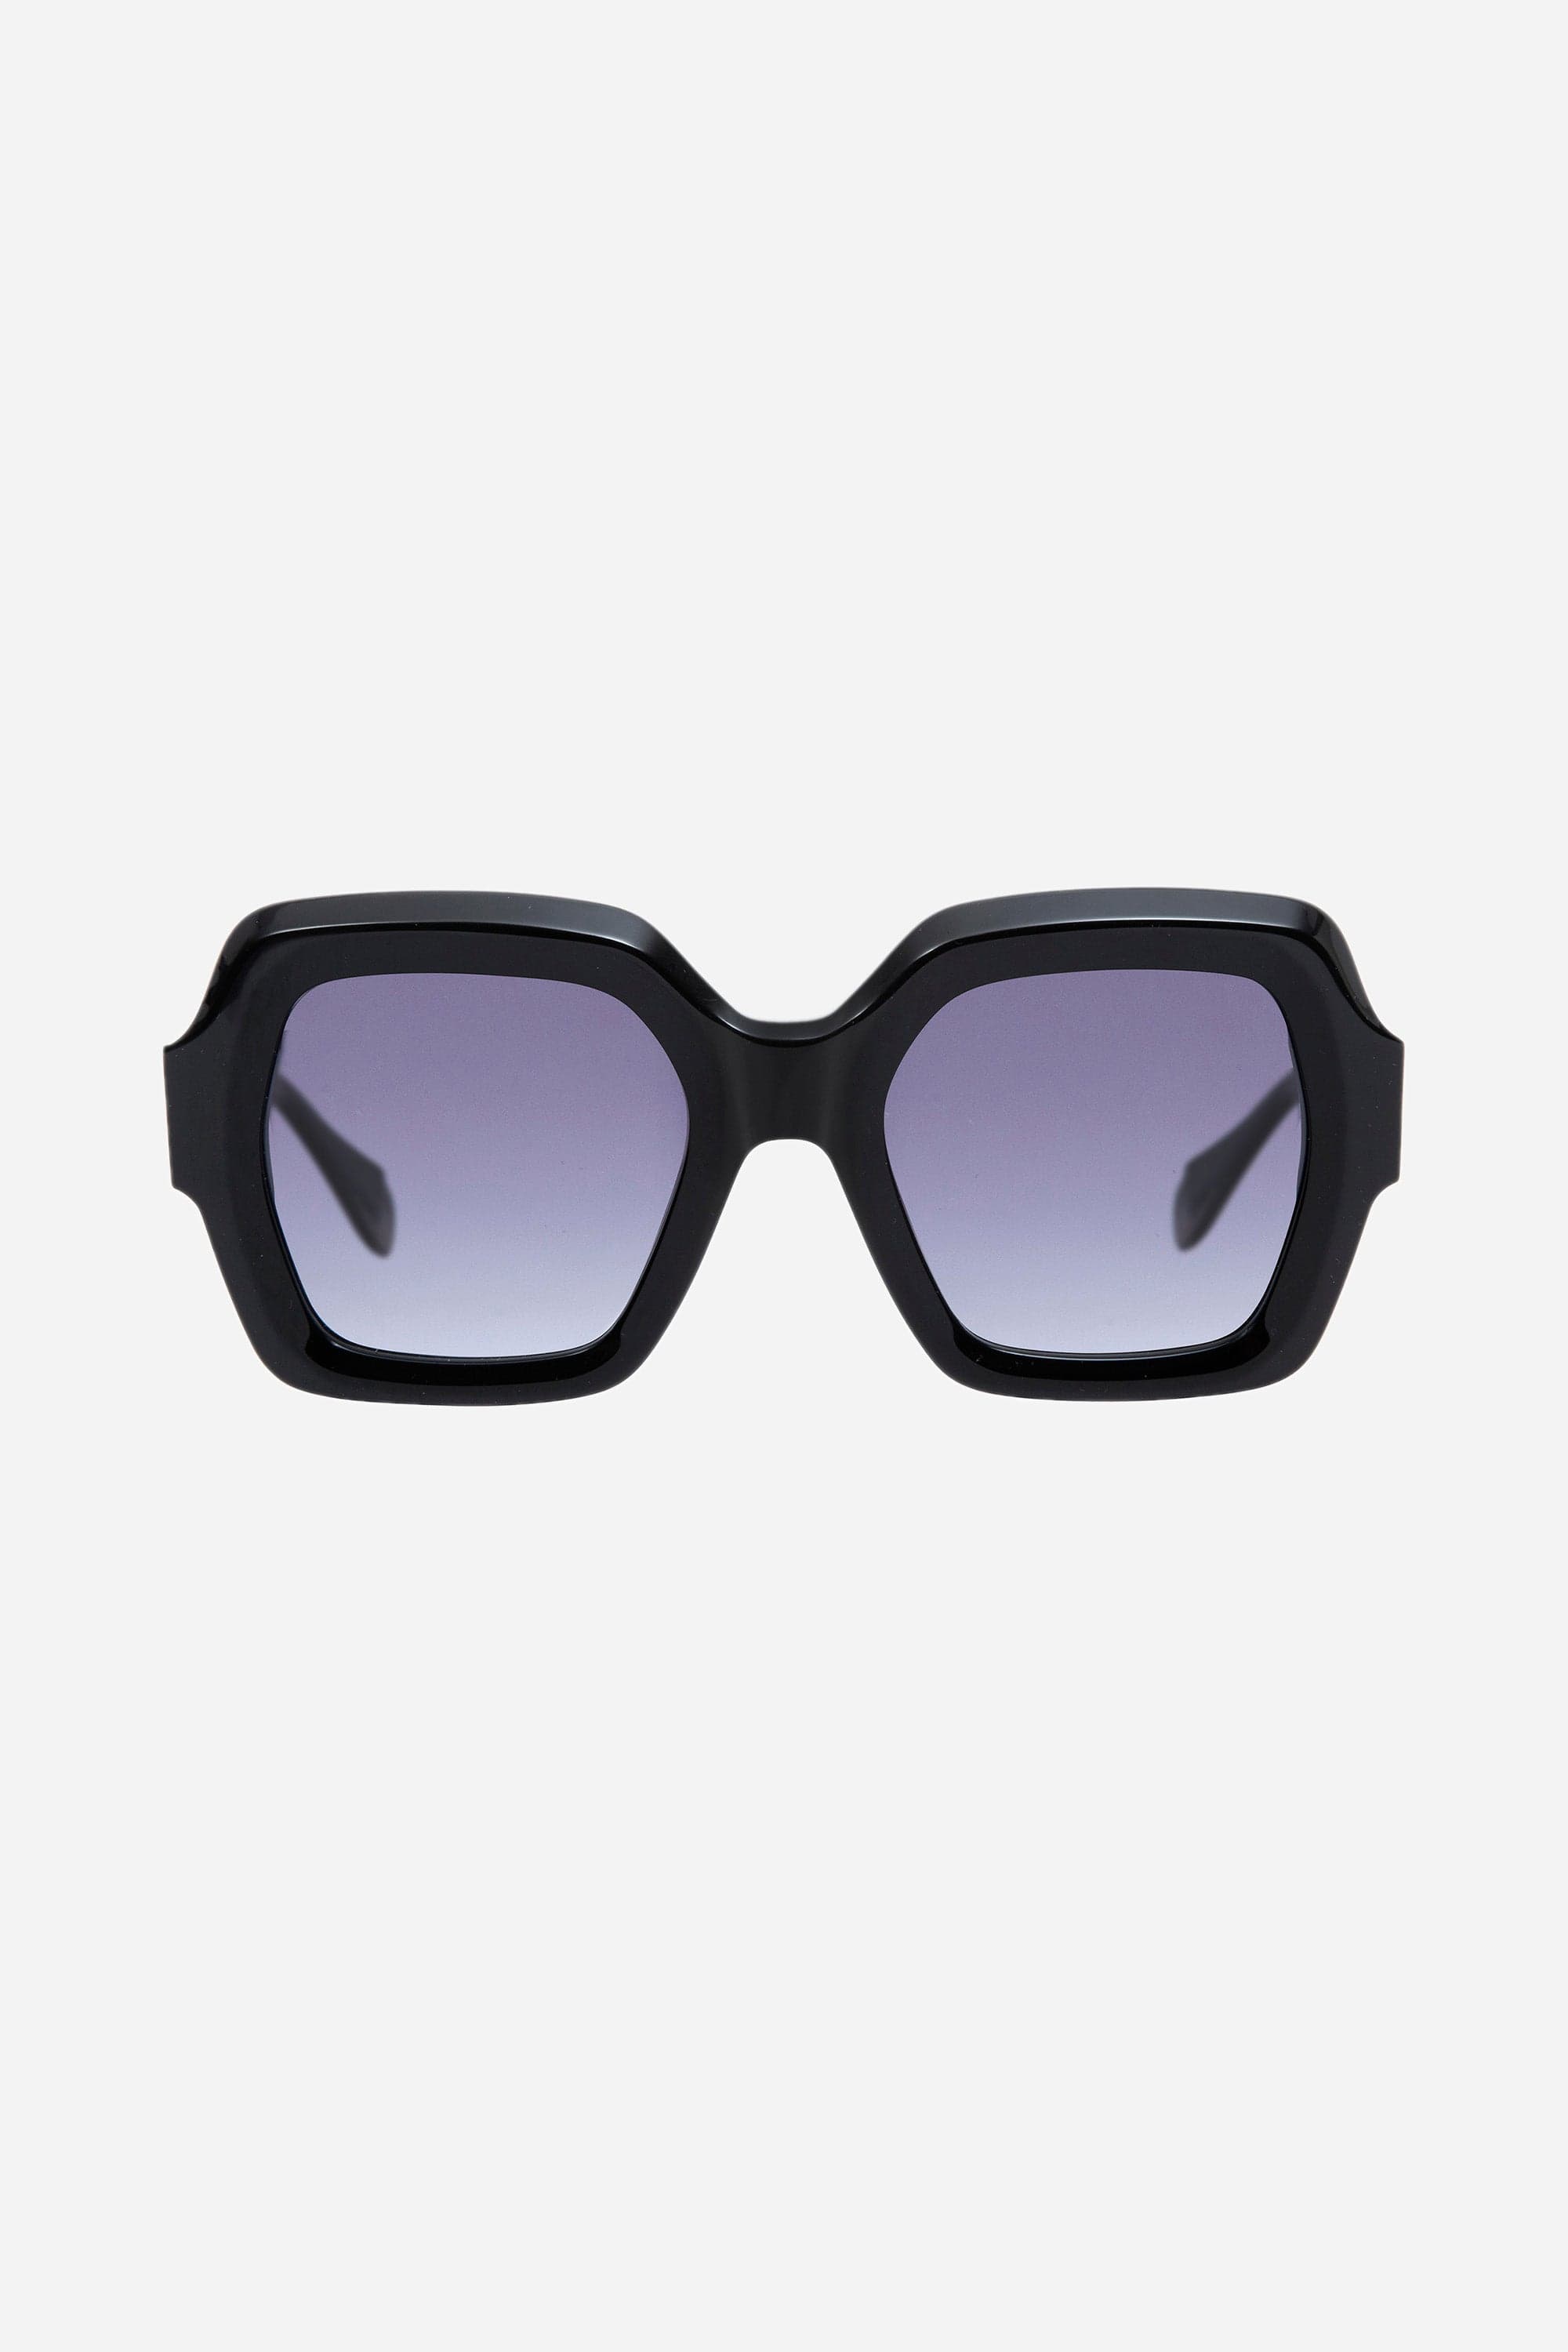 Gigi Studios hexagonal black sunglasses - Eyewear Club